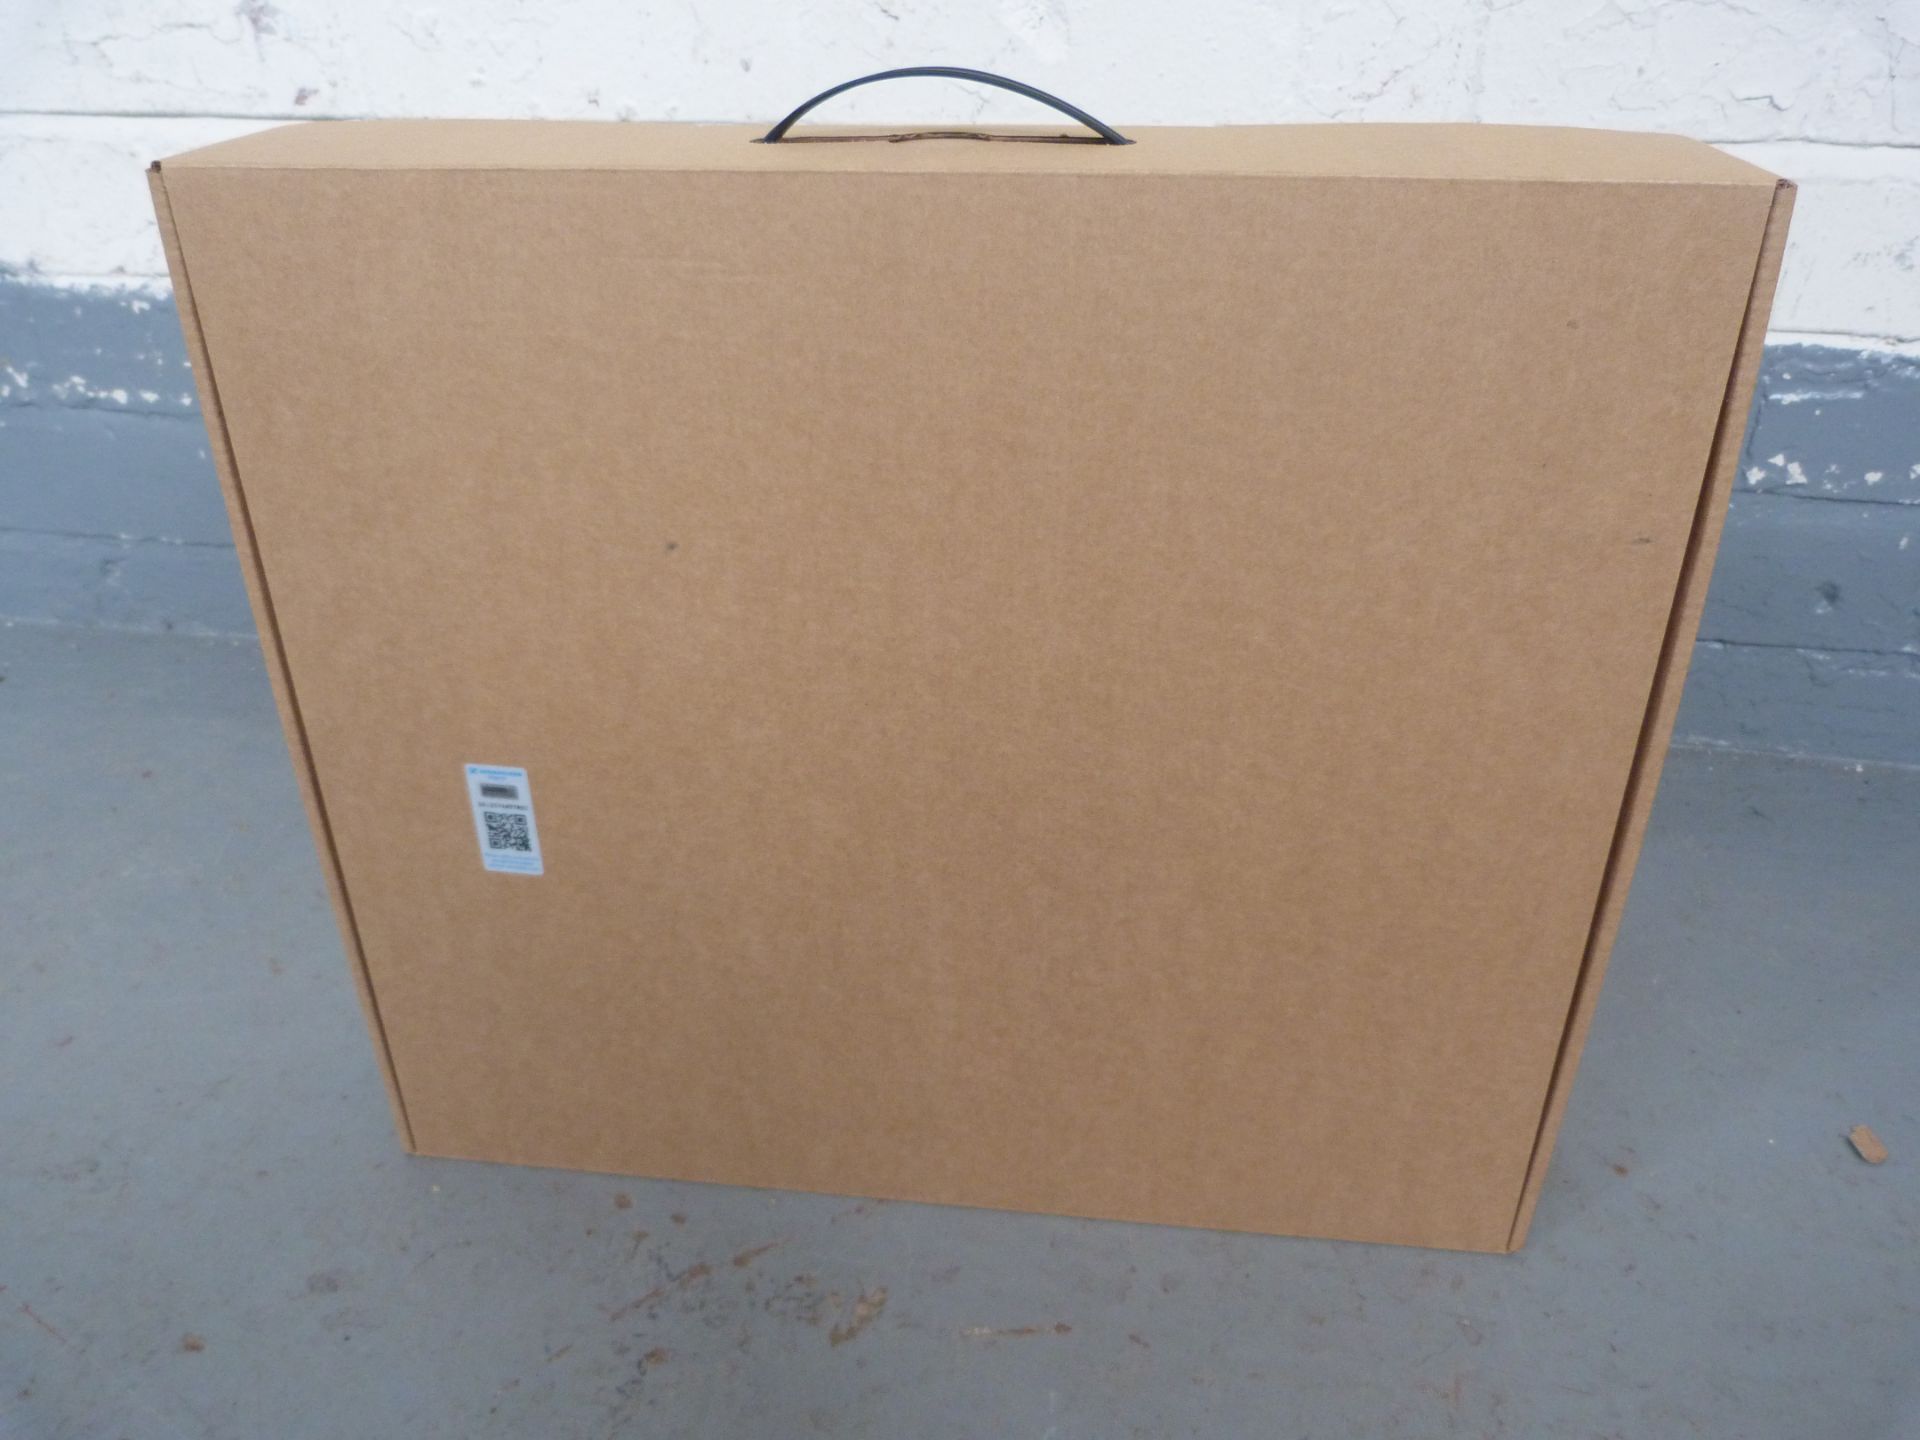 Sennheiser EW 300 G4-BASE SK-RC-GBW Bodypack Base Set 507696. In Cardboard. Serial No: 8348709860 - Image 5 of 5